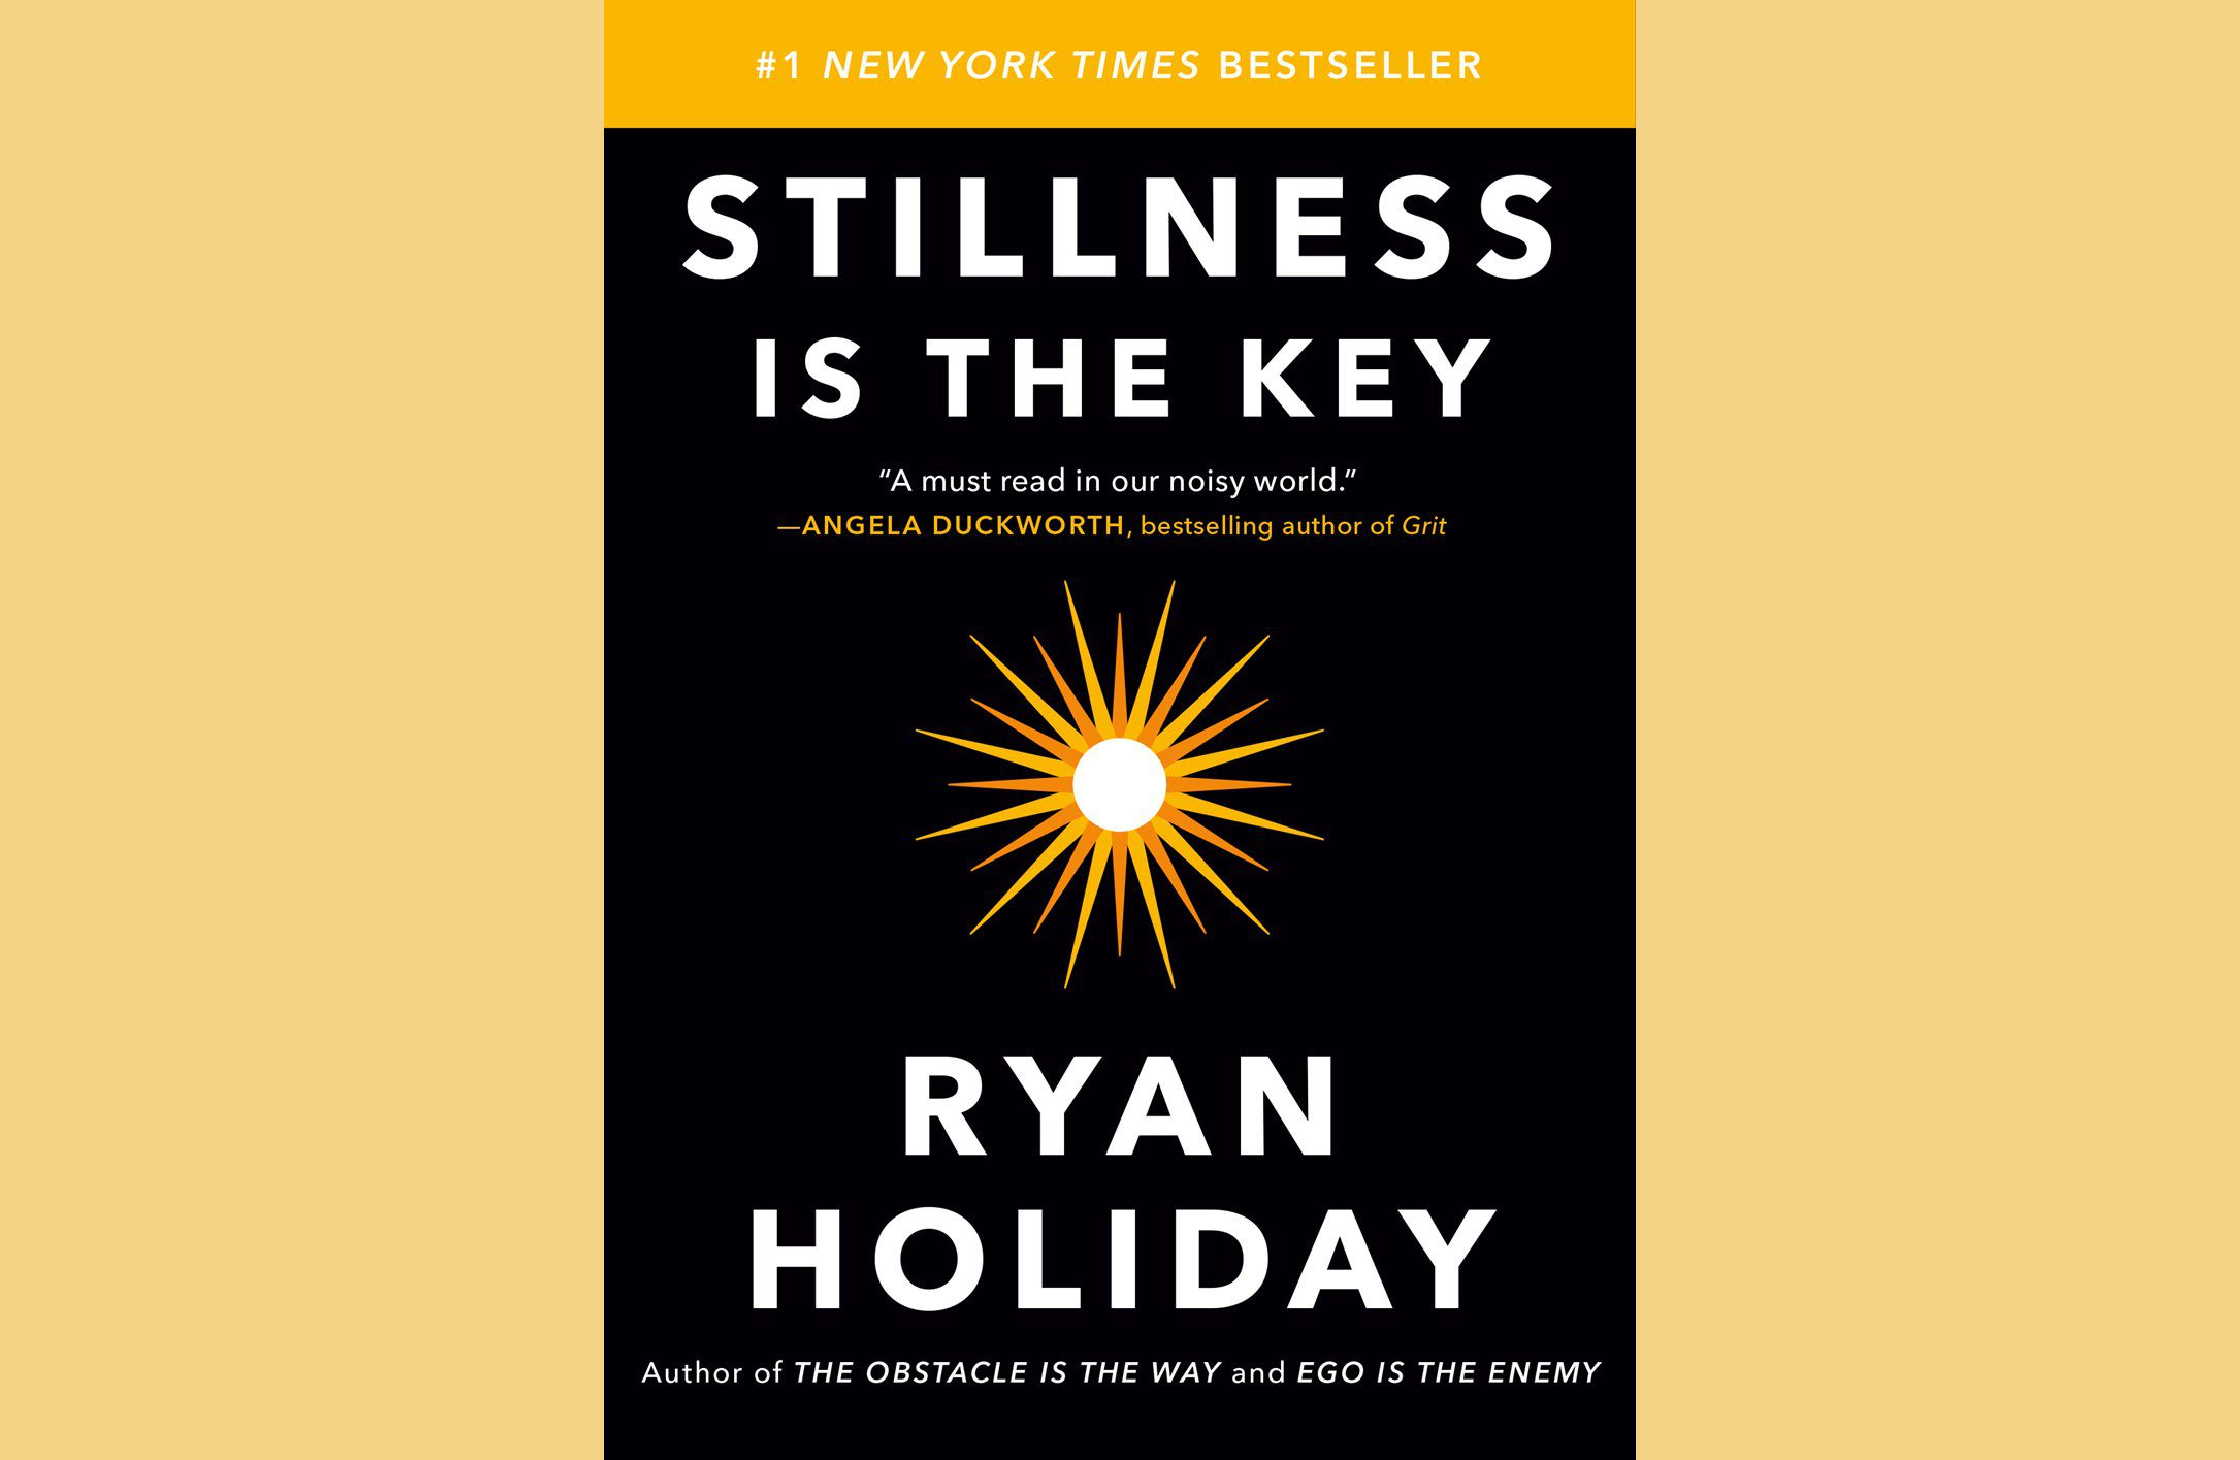 Summary: Stillness Is the Key by Ryan Holiday